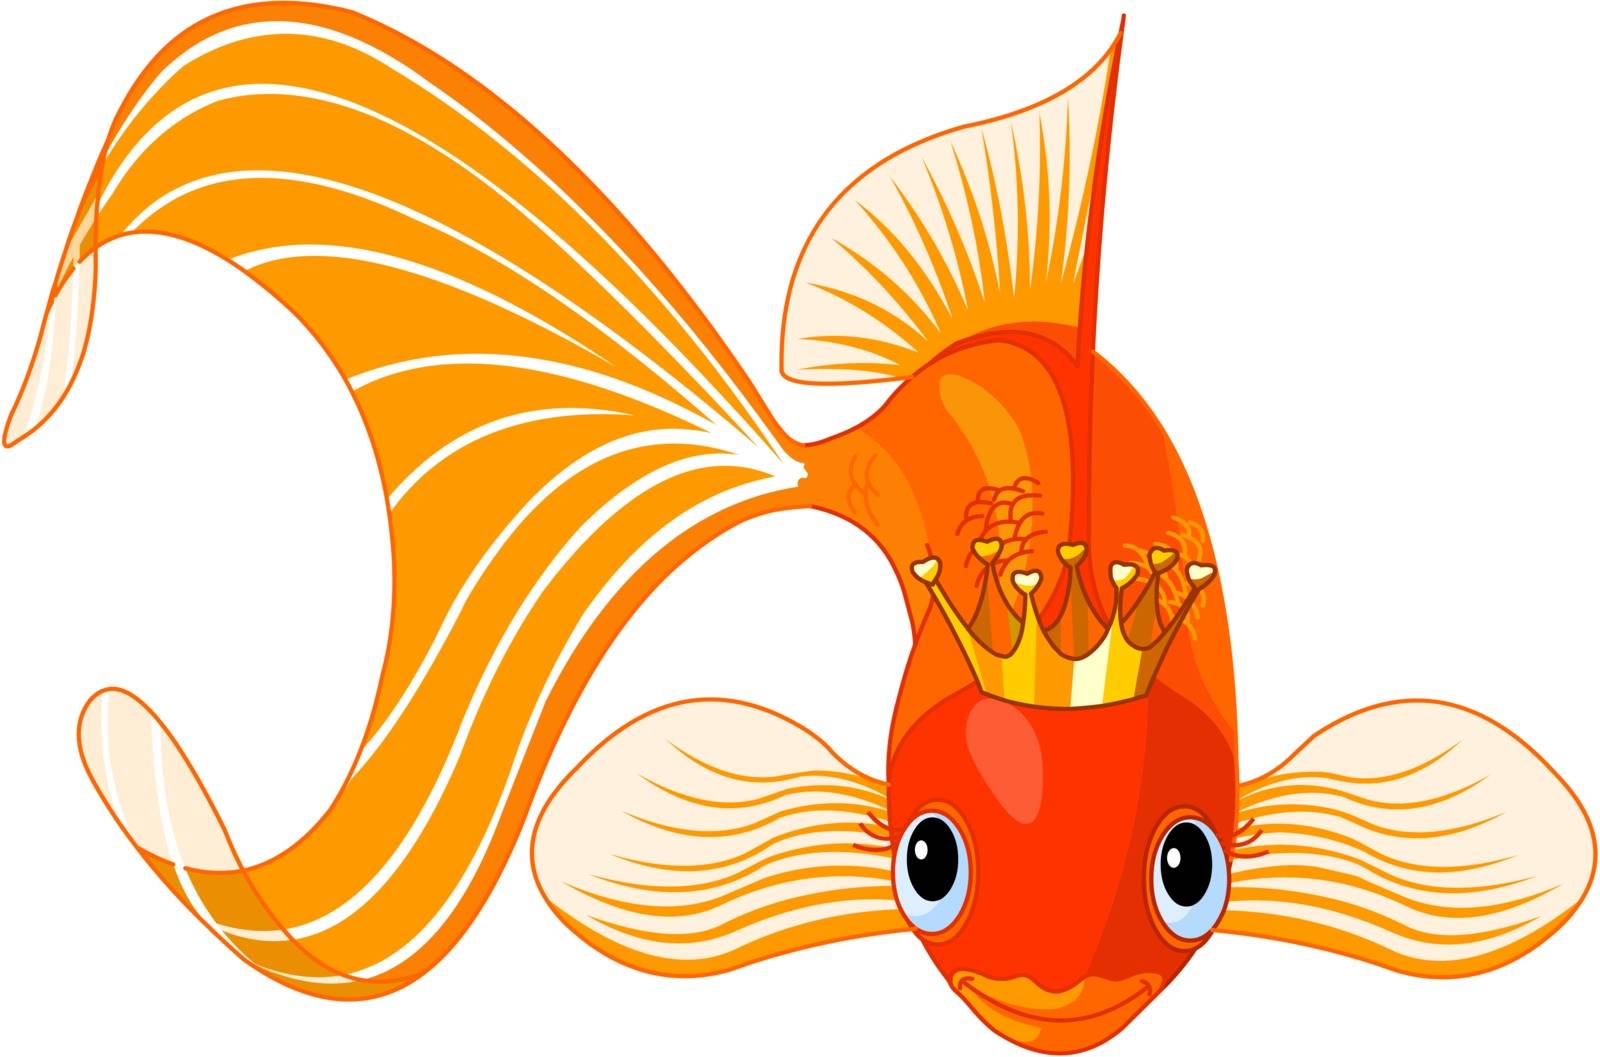 Goldfish queen by Dazdraperma